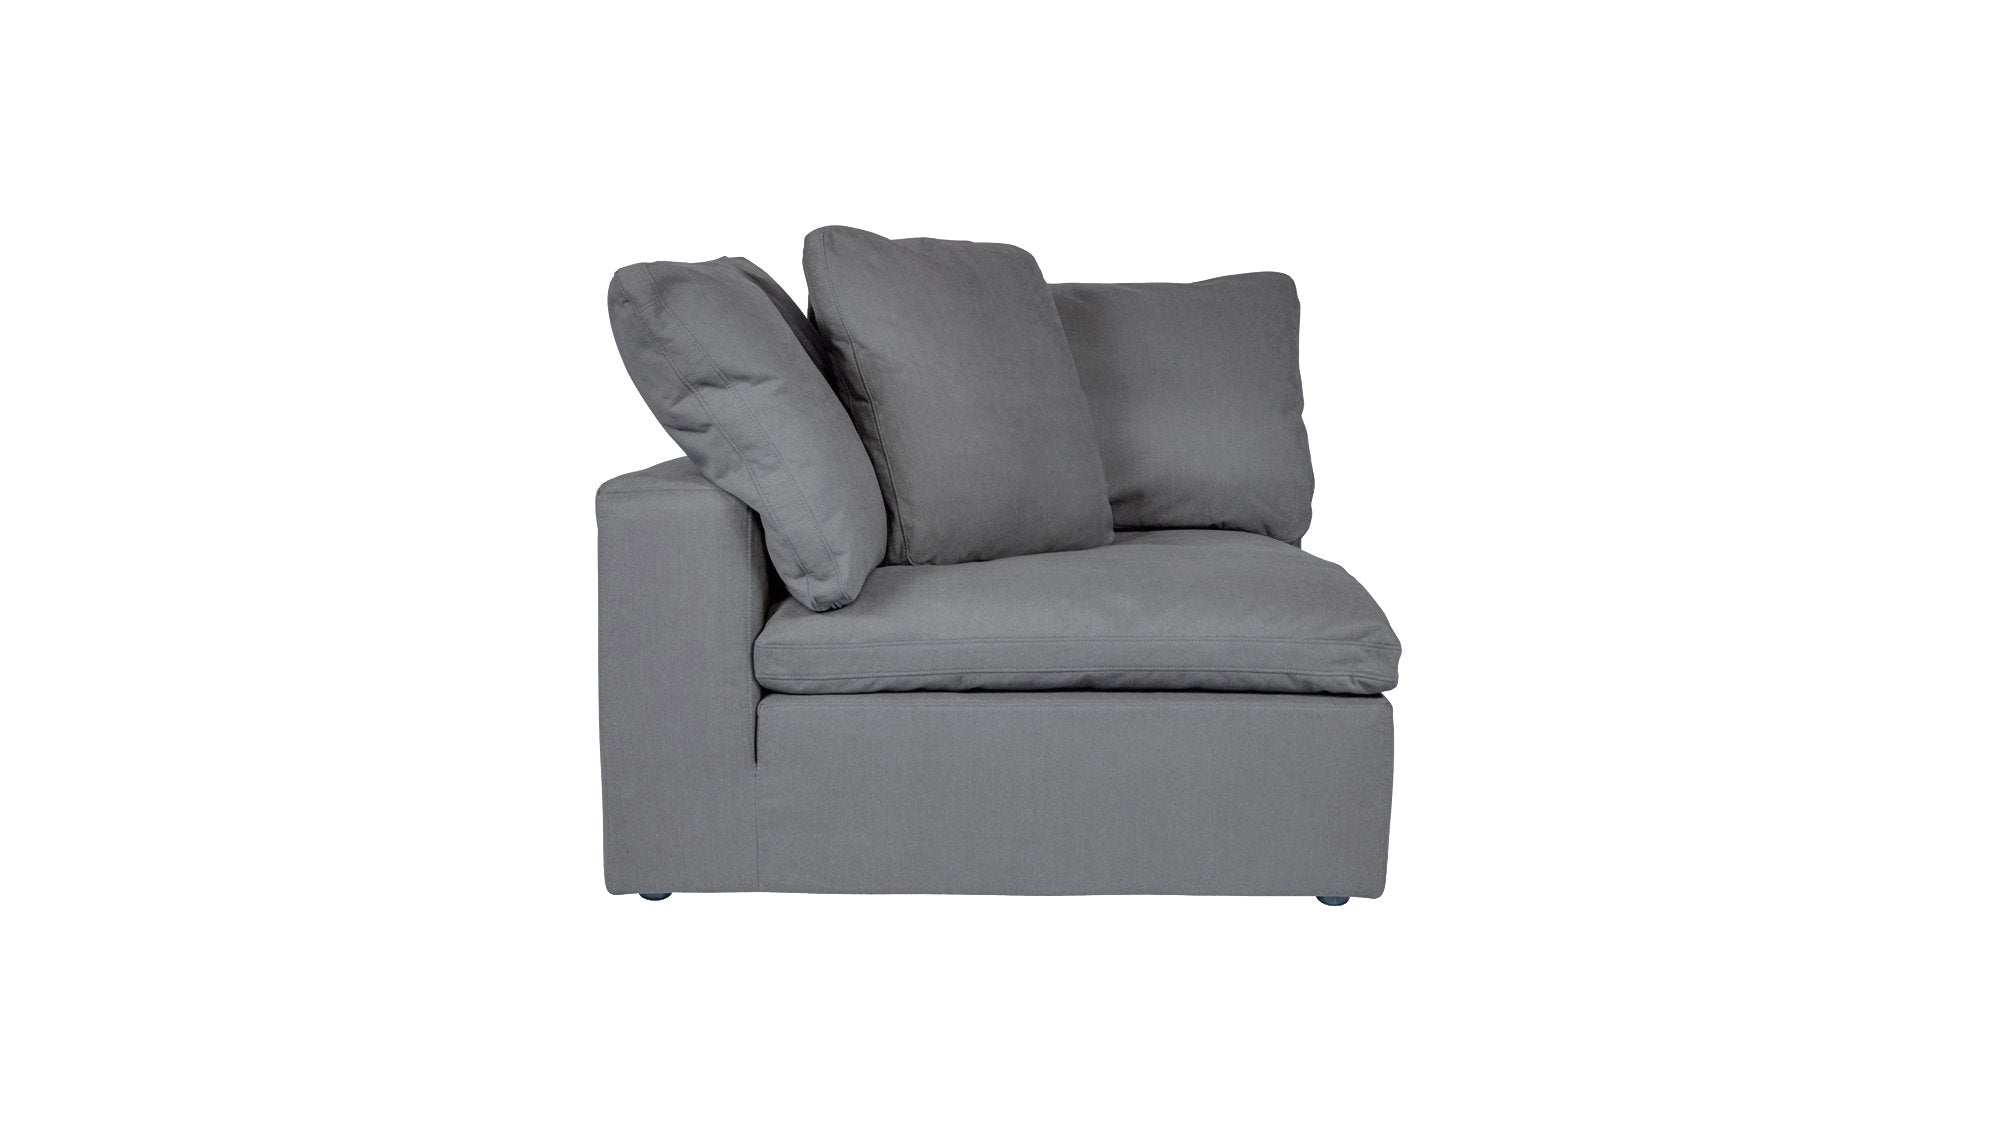 Slipcover - Movie Night™ Corner Chair, Standard, Gentle Rain (Left or Right) - Image 1